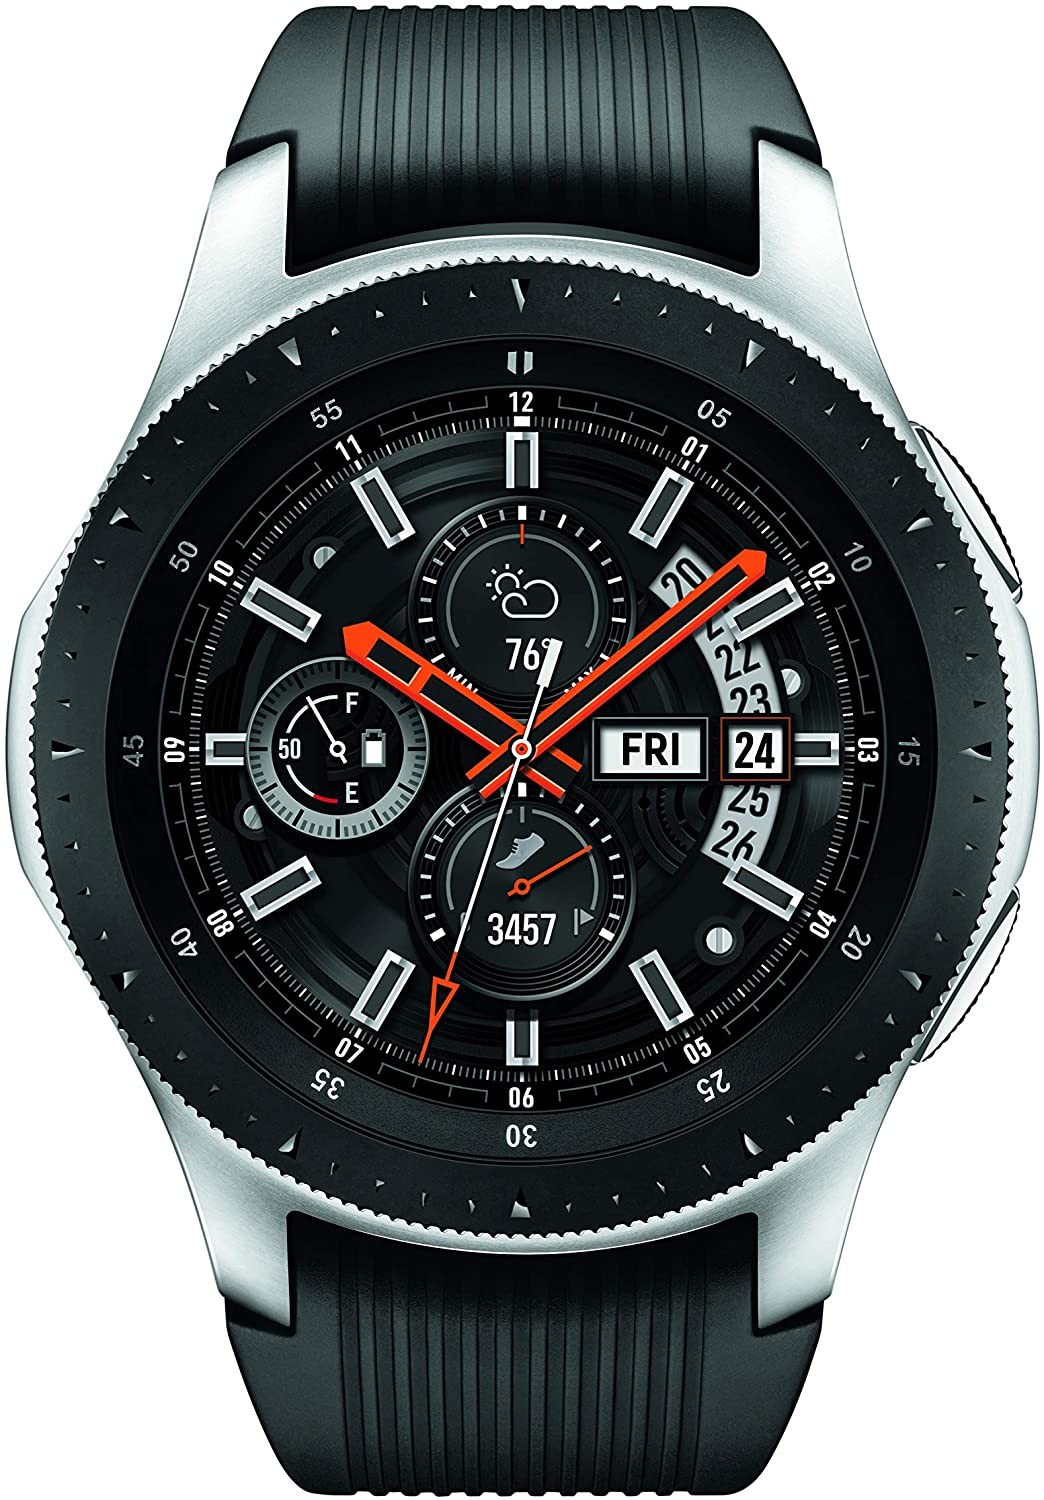 Samsung Galaxy Watch smartwatch (46mm, GPS, Bluetooth) – Silver/Black